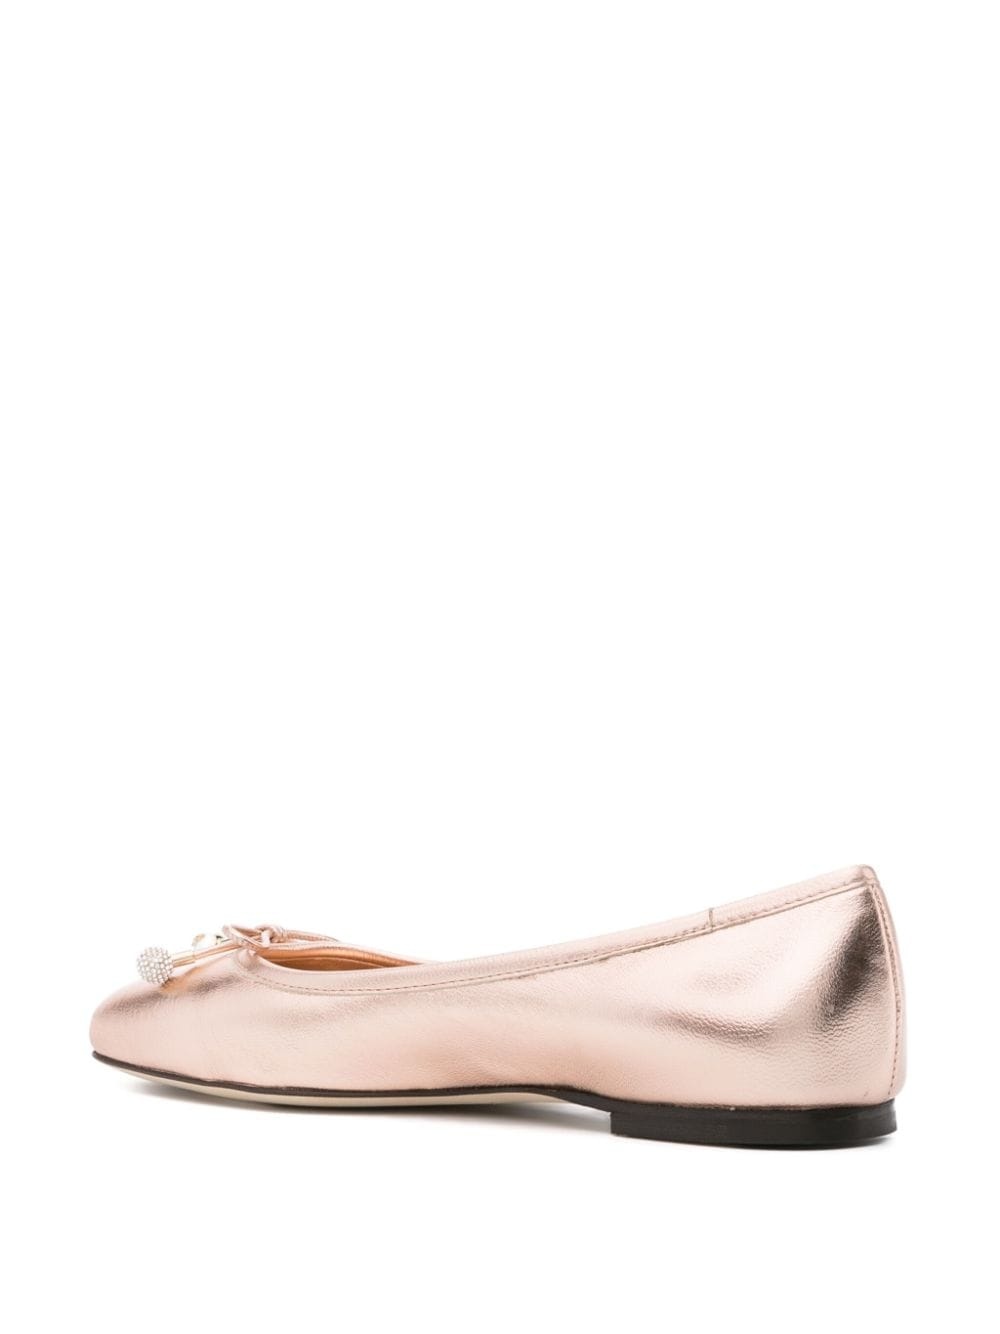 Elme metallic ballerina shoes - 3